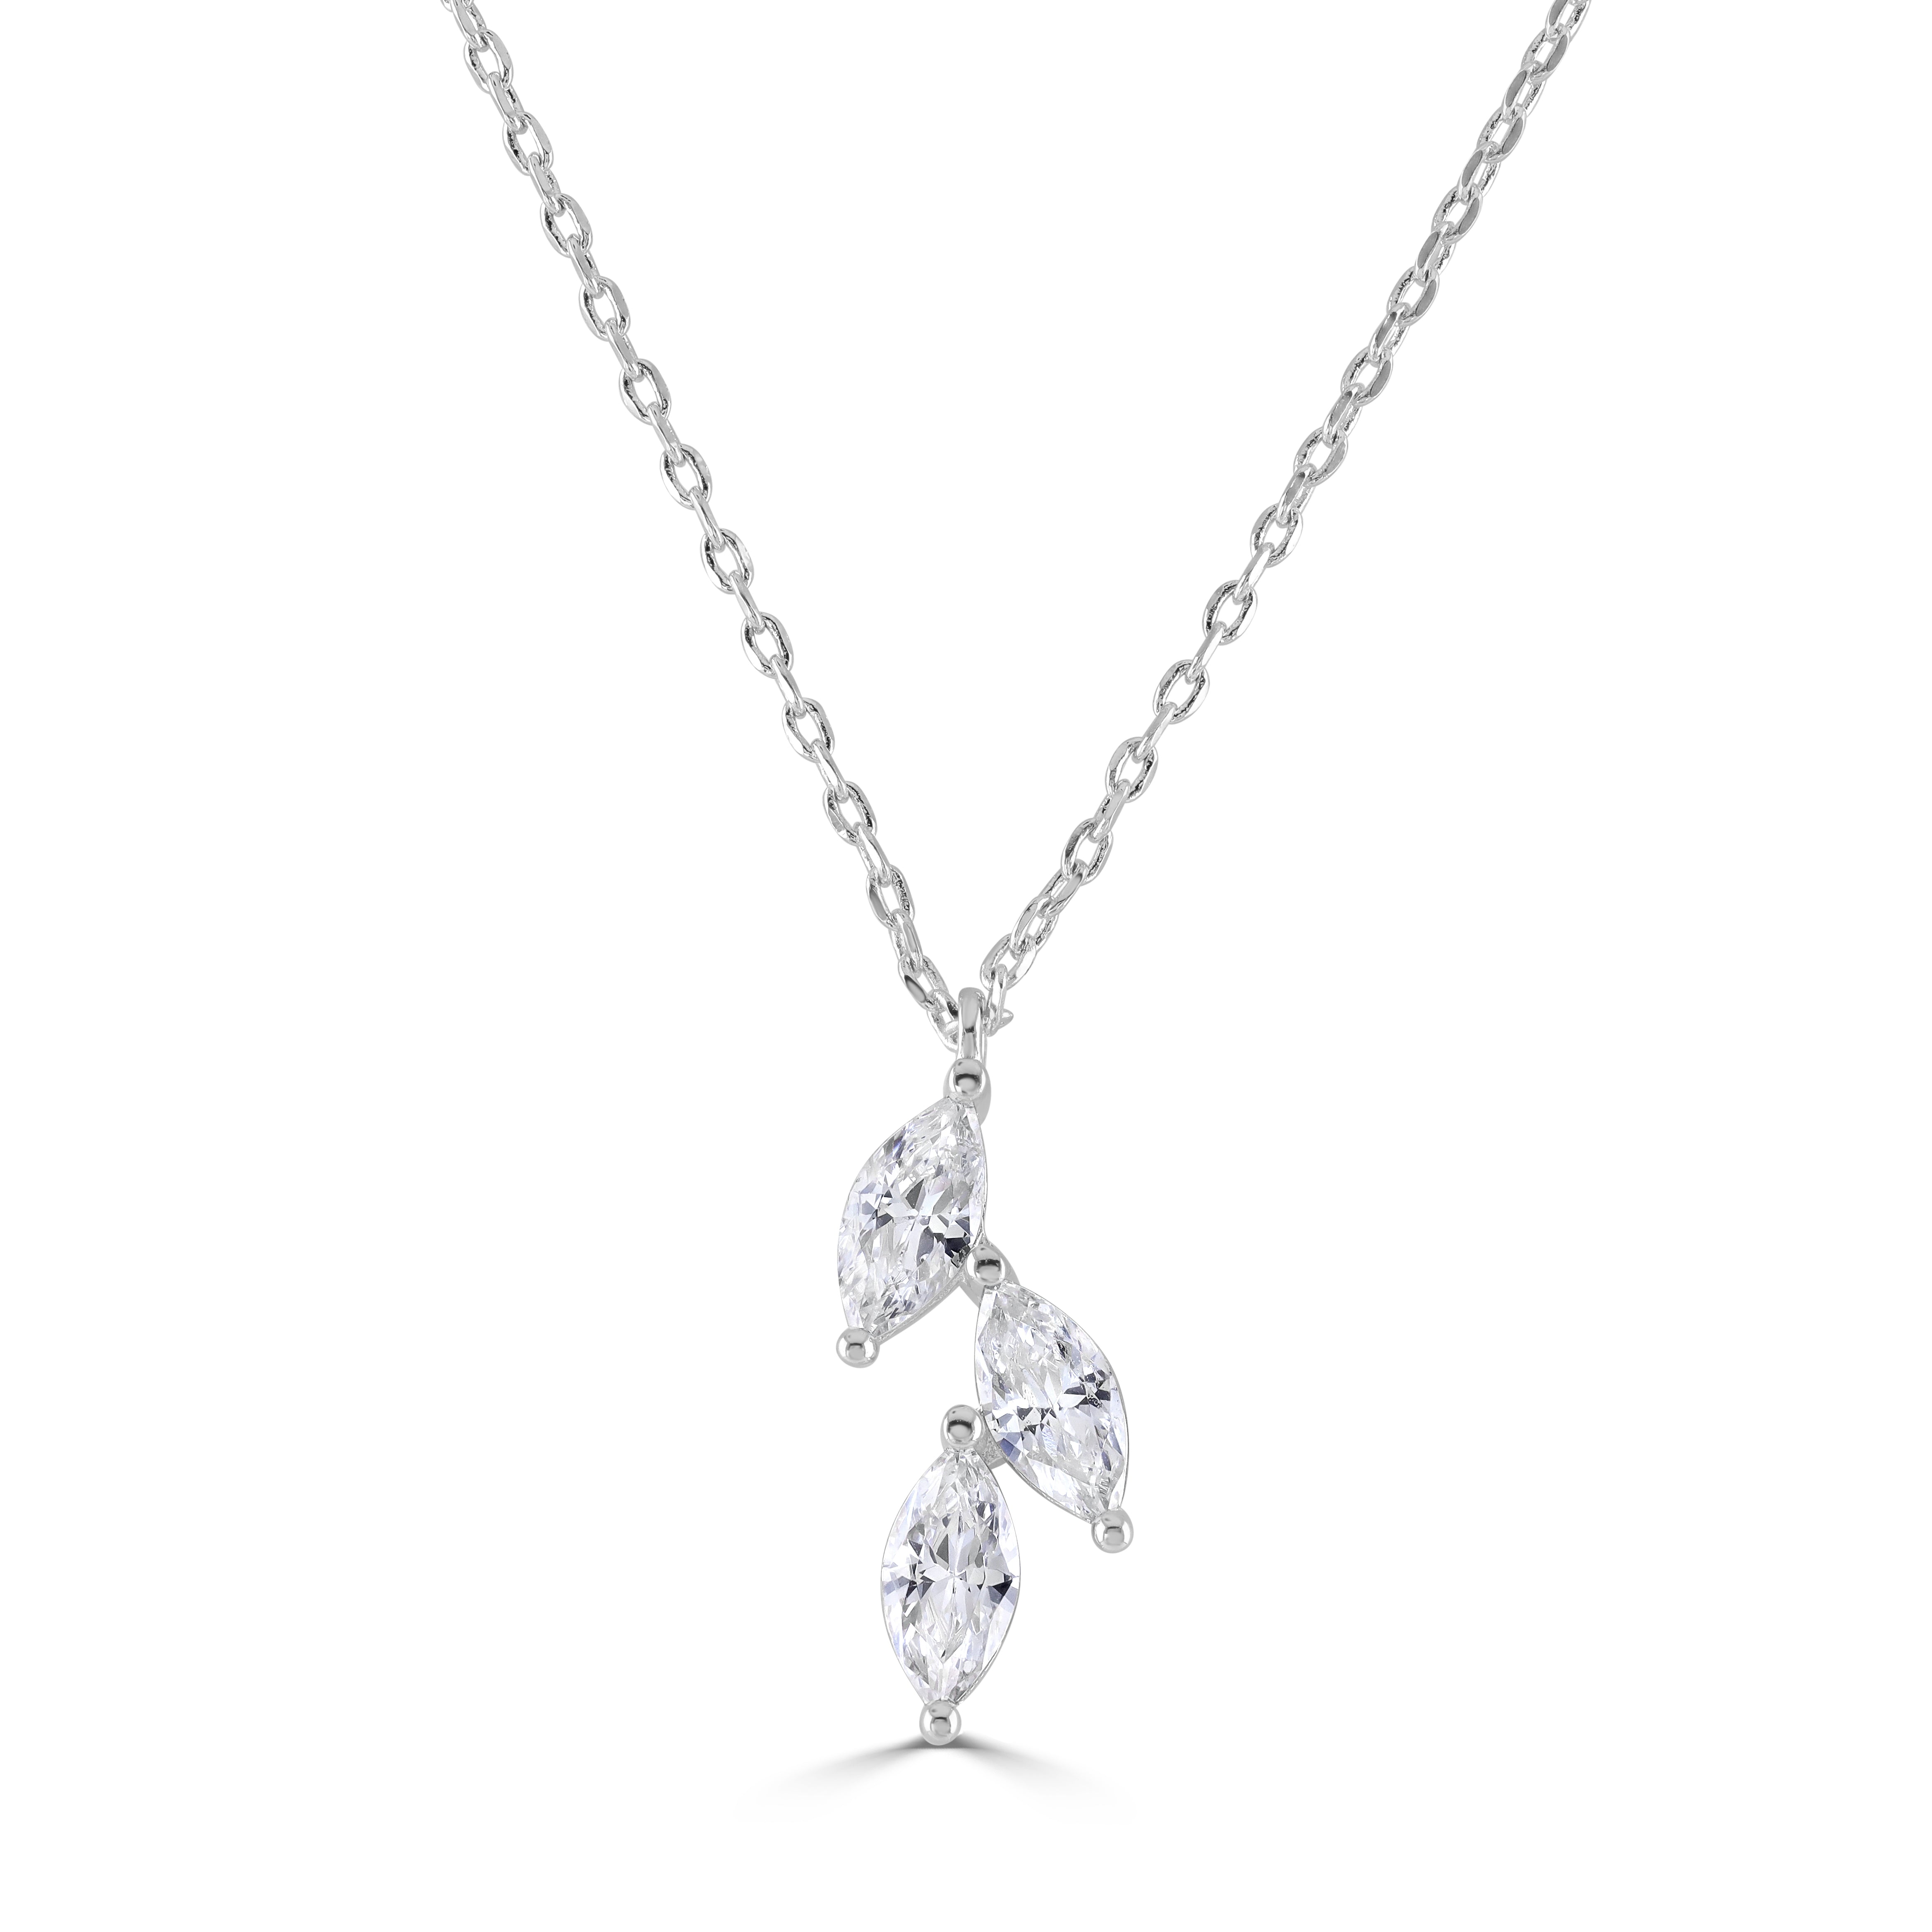 JANEY // Silver dainty leaf necklace